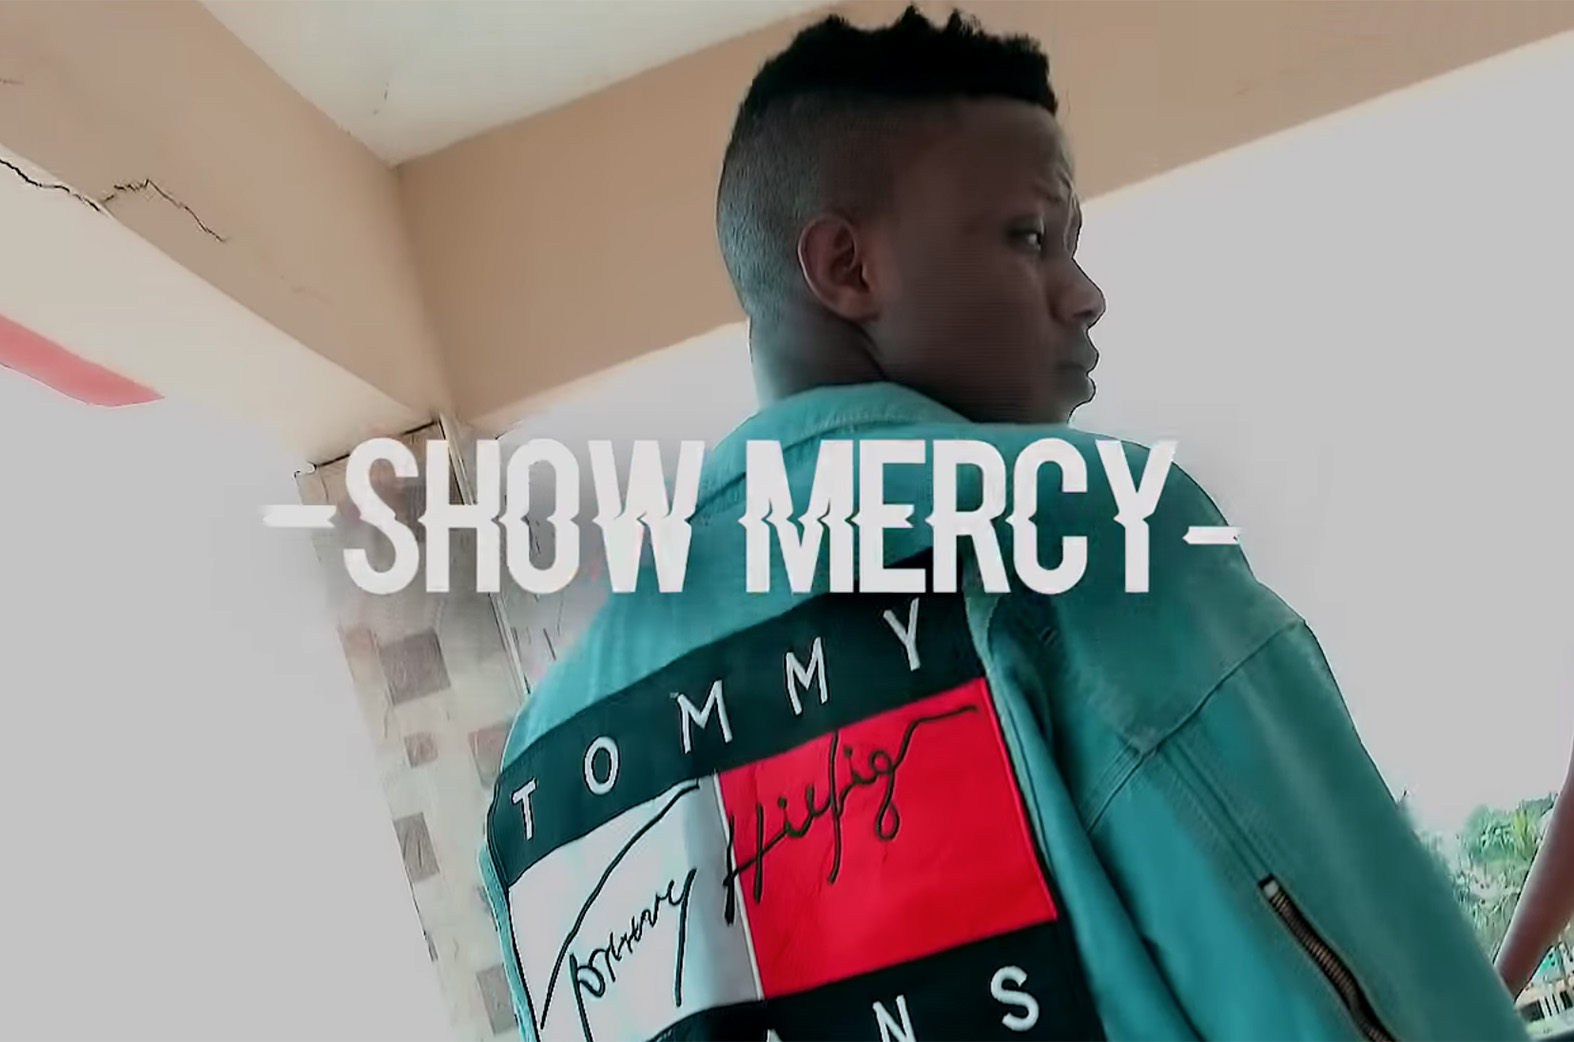 Show Mercy by Sherry Boss feat. Ennwai